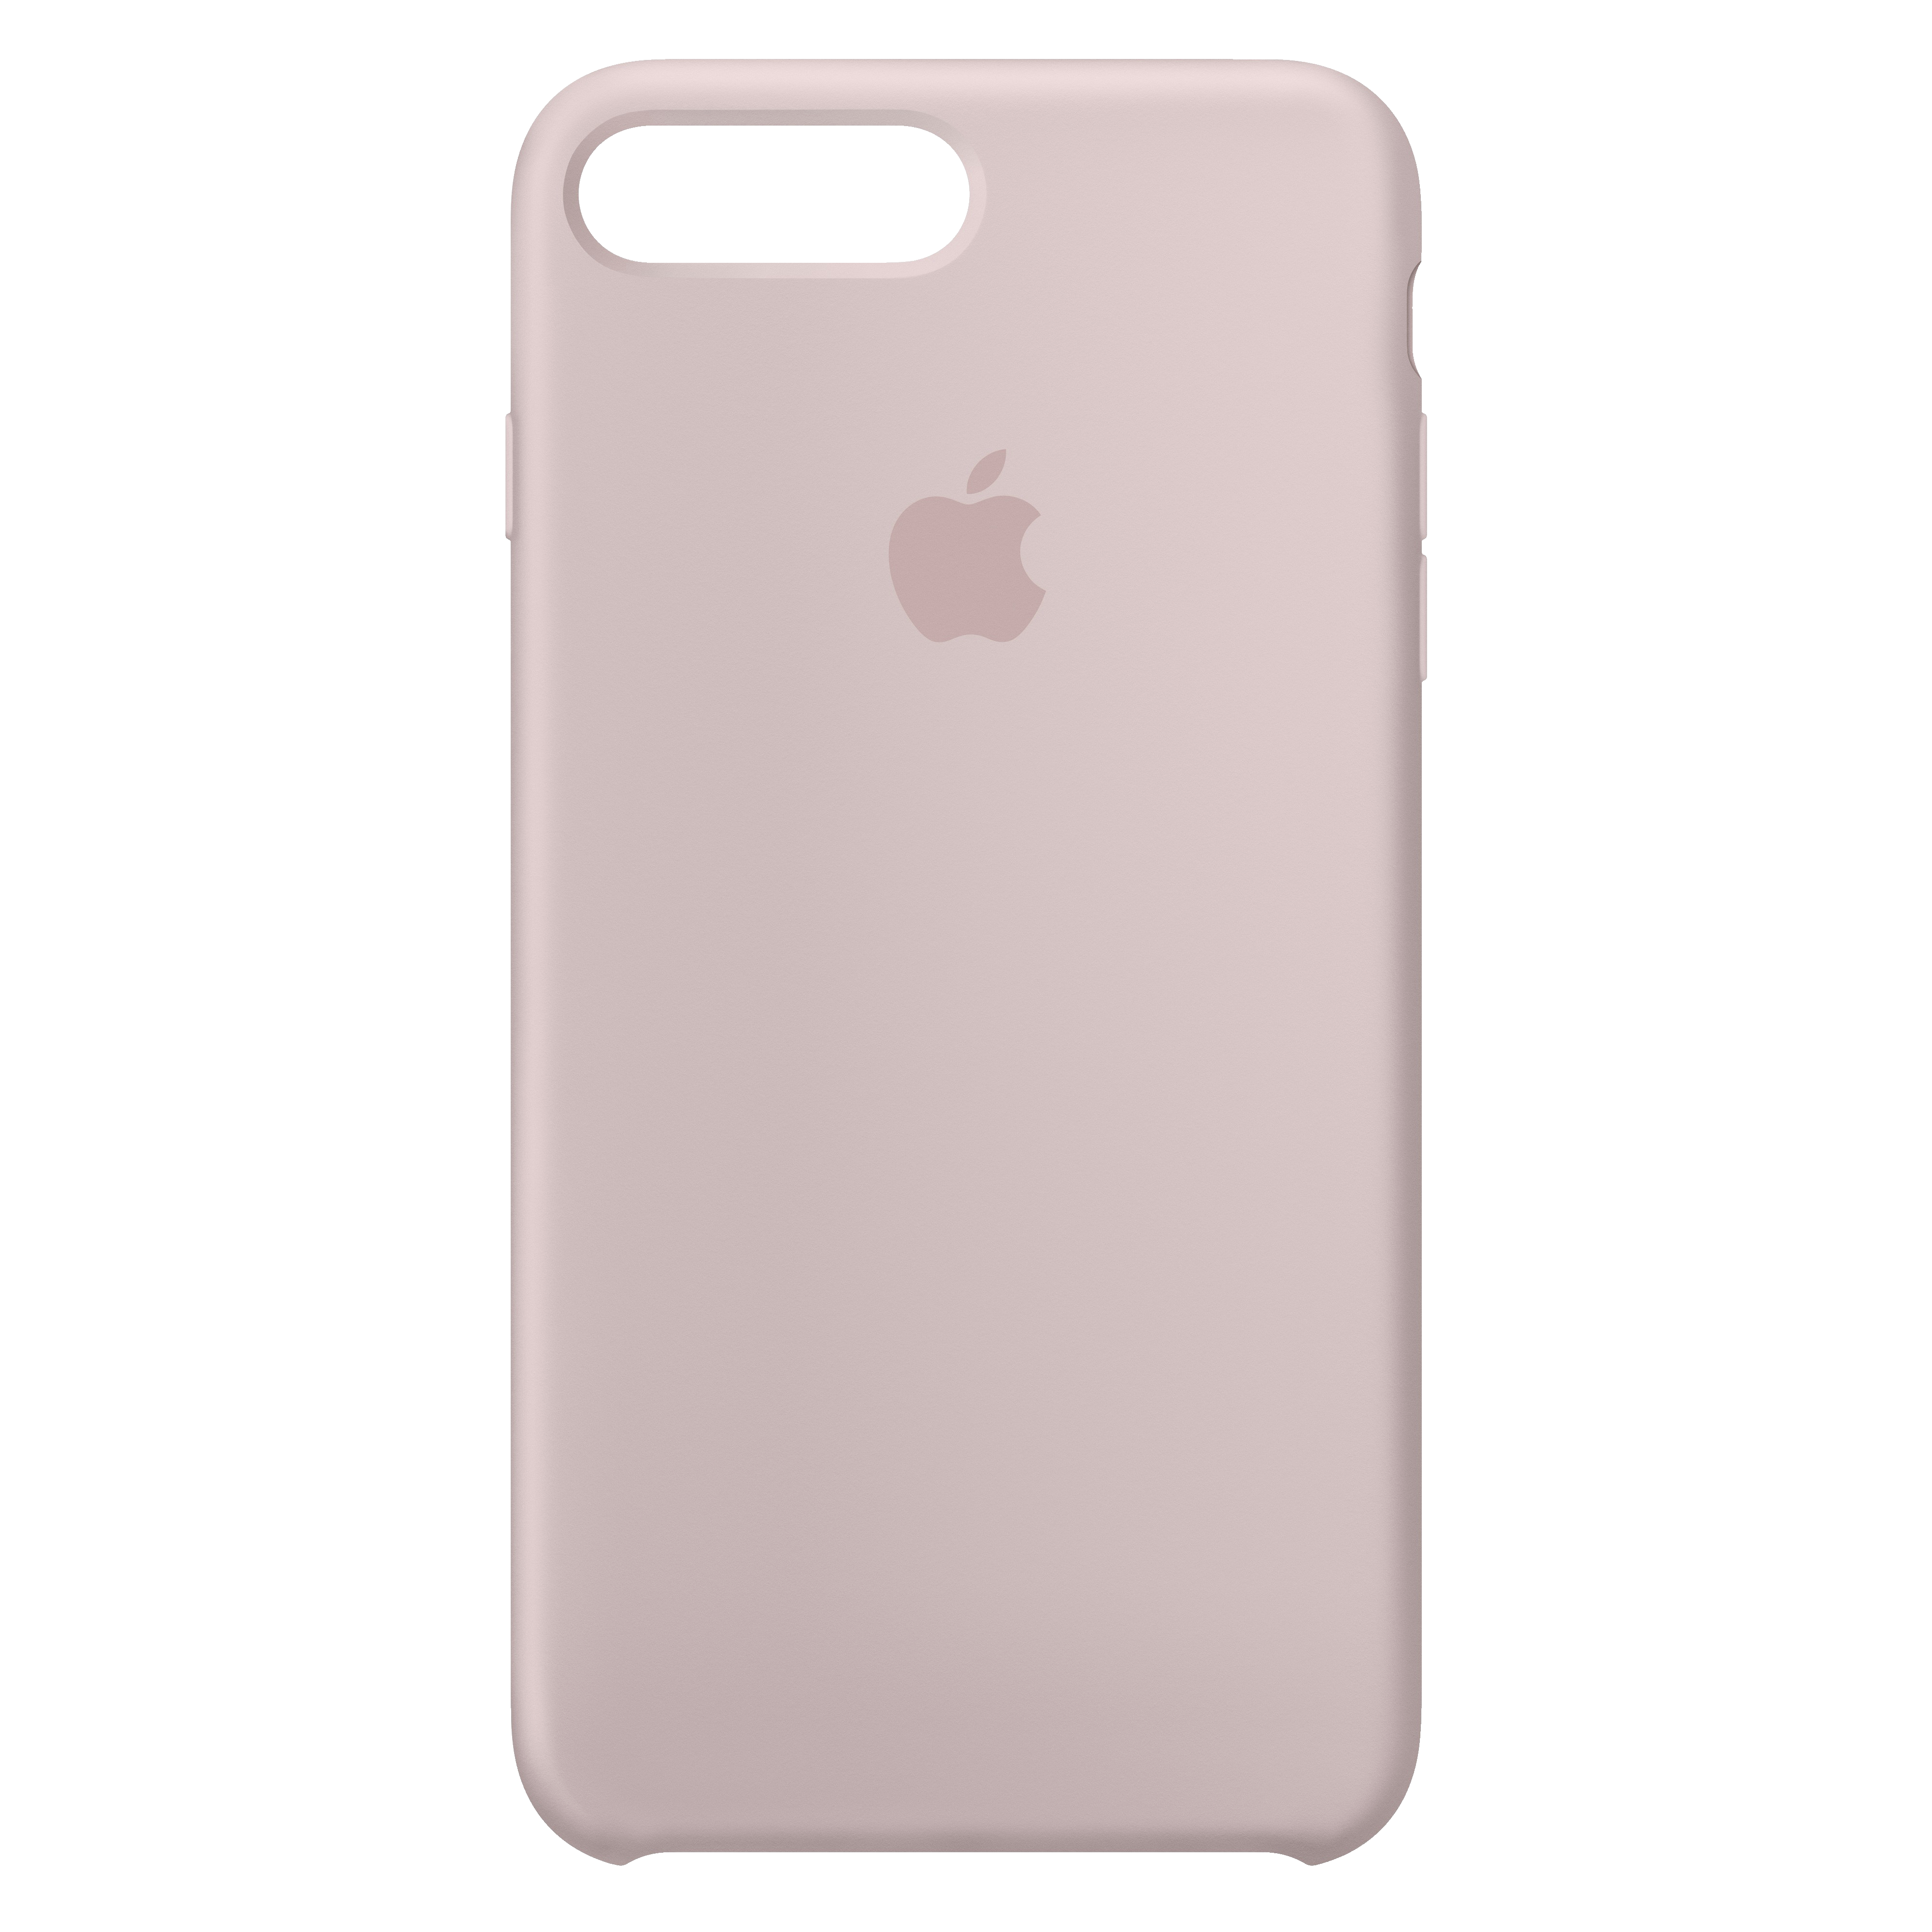 iPhone 8 Plus silikondeksel (rosa sand) - Deksler og etui til mobiltelefon  - Elkjøp